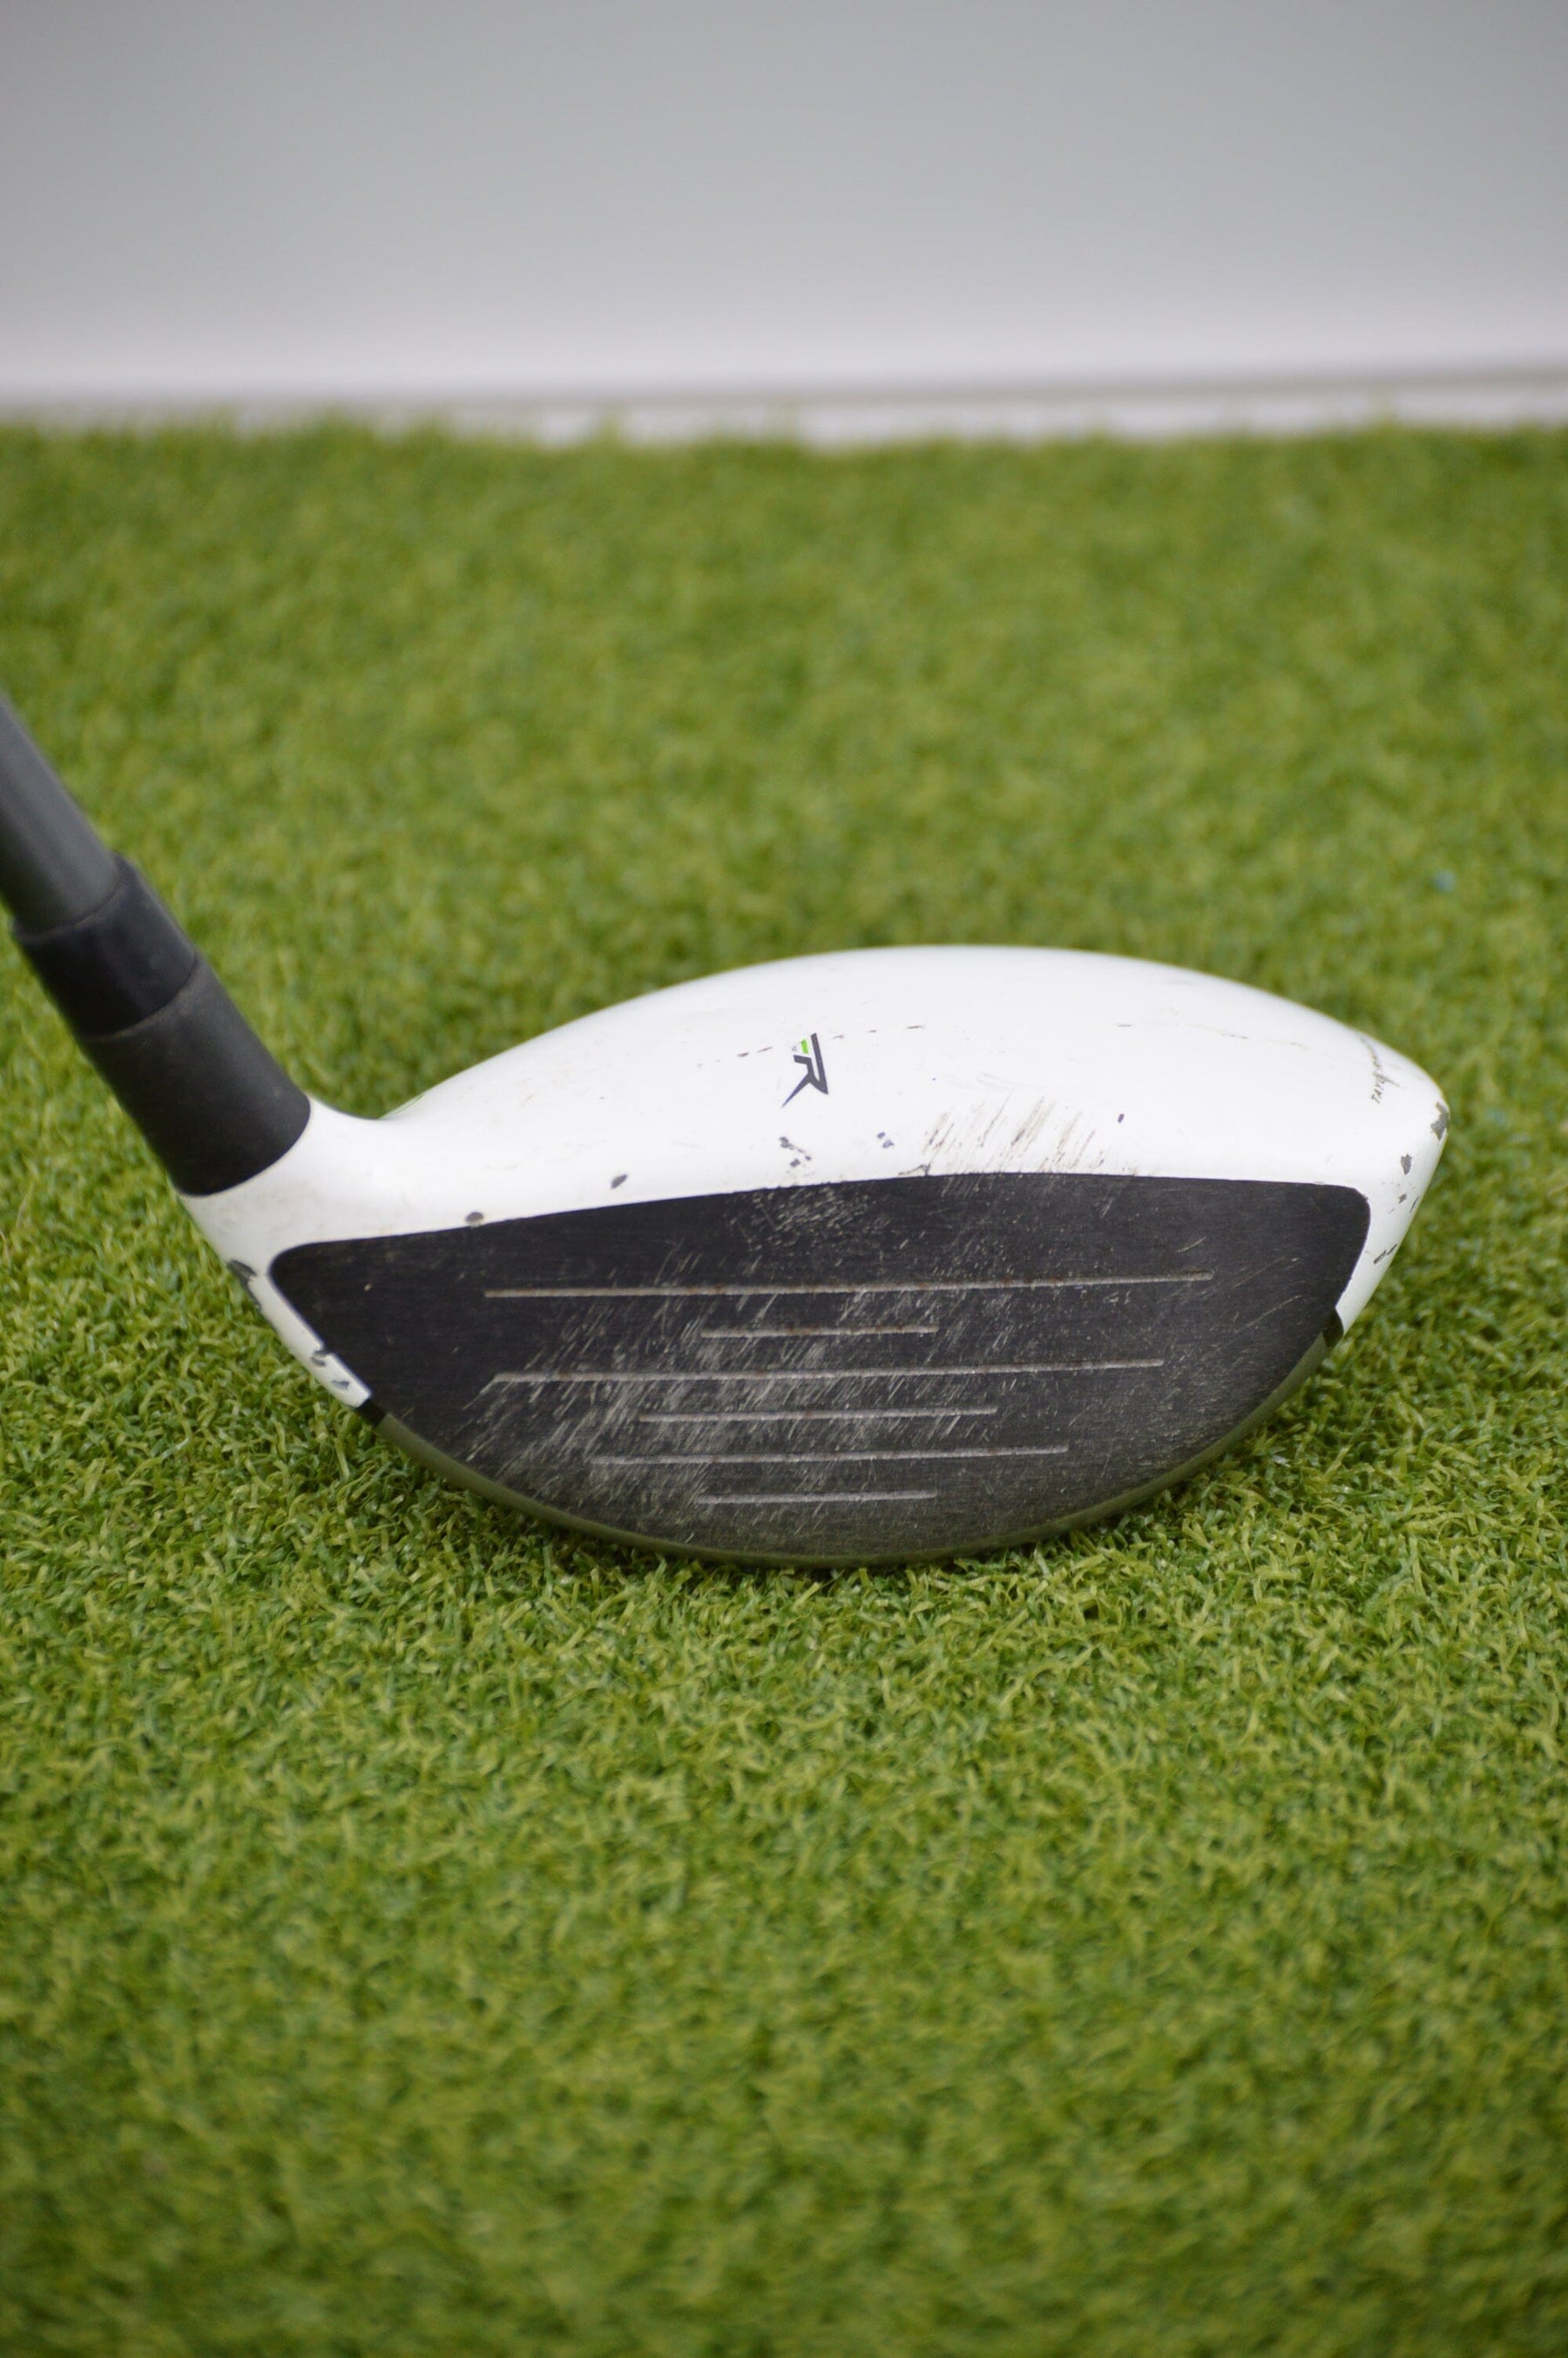 Lefty TaylorMade RBZ 3 Hybrid R Flex Golf Clubs GolfRoots 